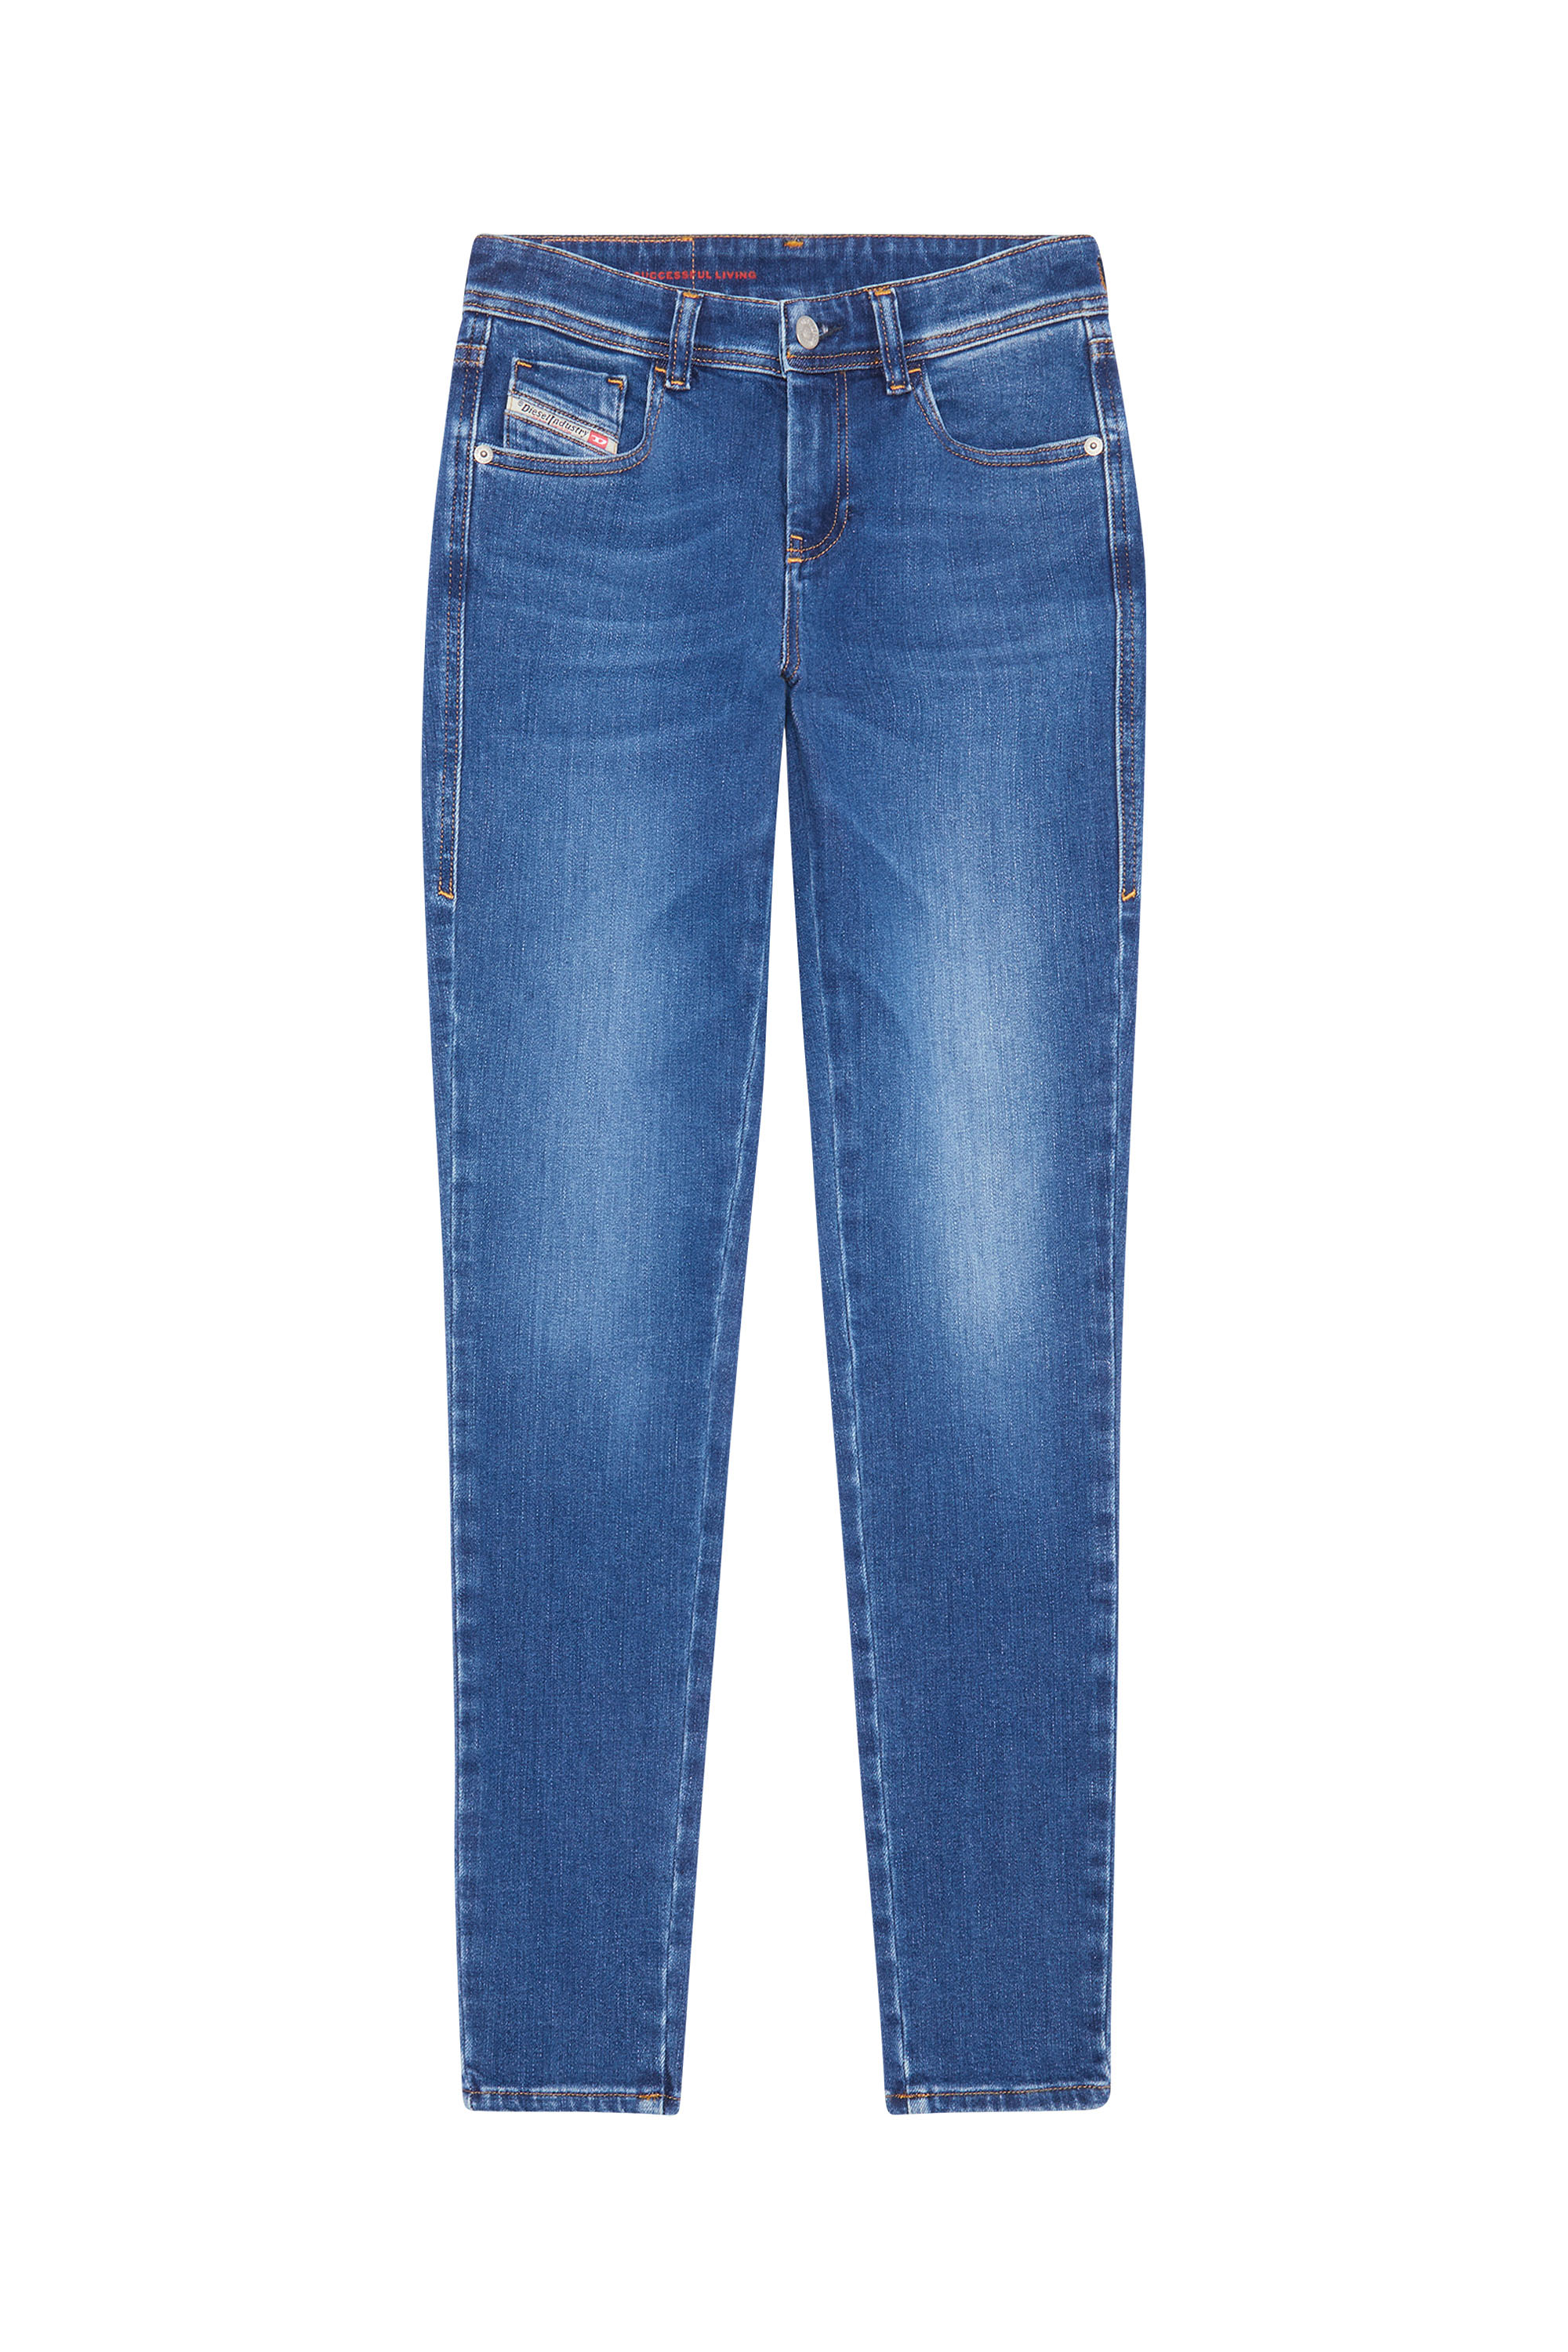 2017 SLANDY 09C21 Super skinny Jeans, Mittelblau - Jeans